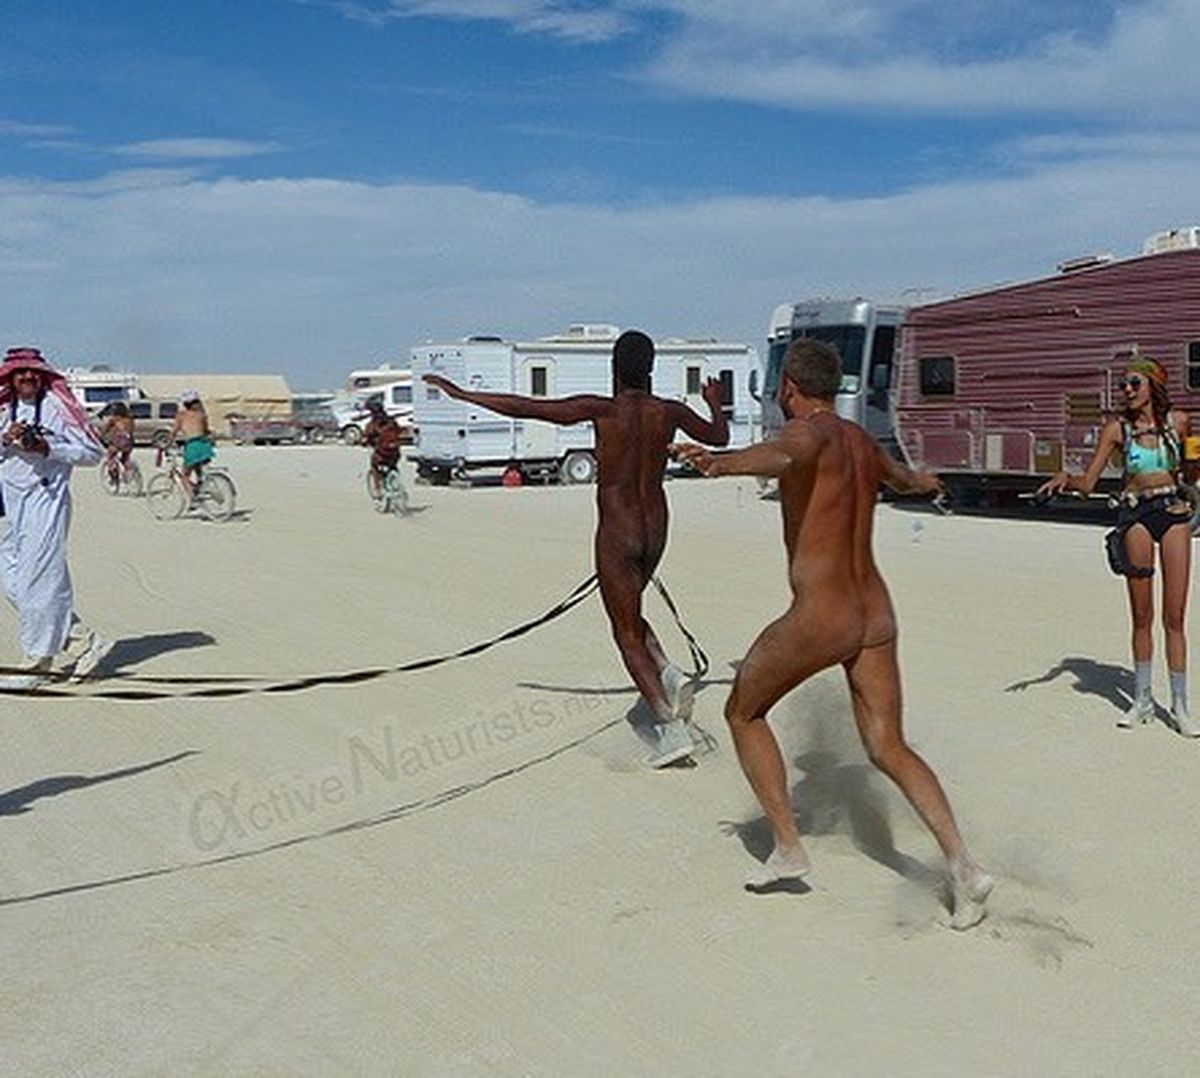 https://www.nudismlife.com/galleries/public_nudity/burning_man/active_naturists/active_naturists_003.jpg